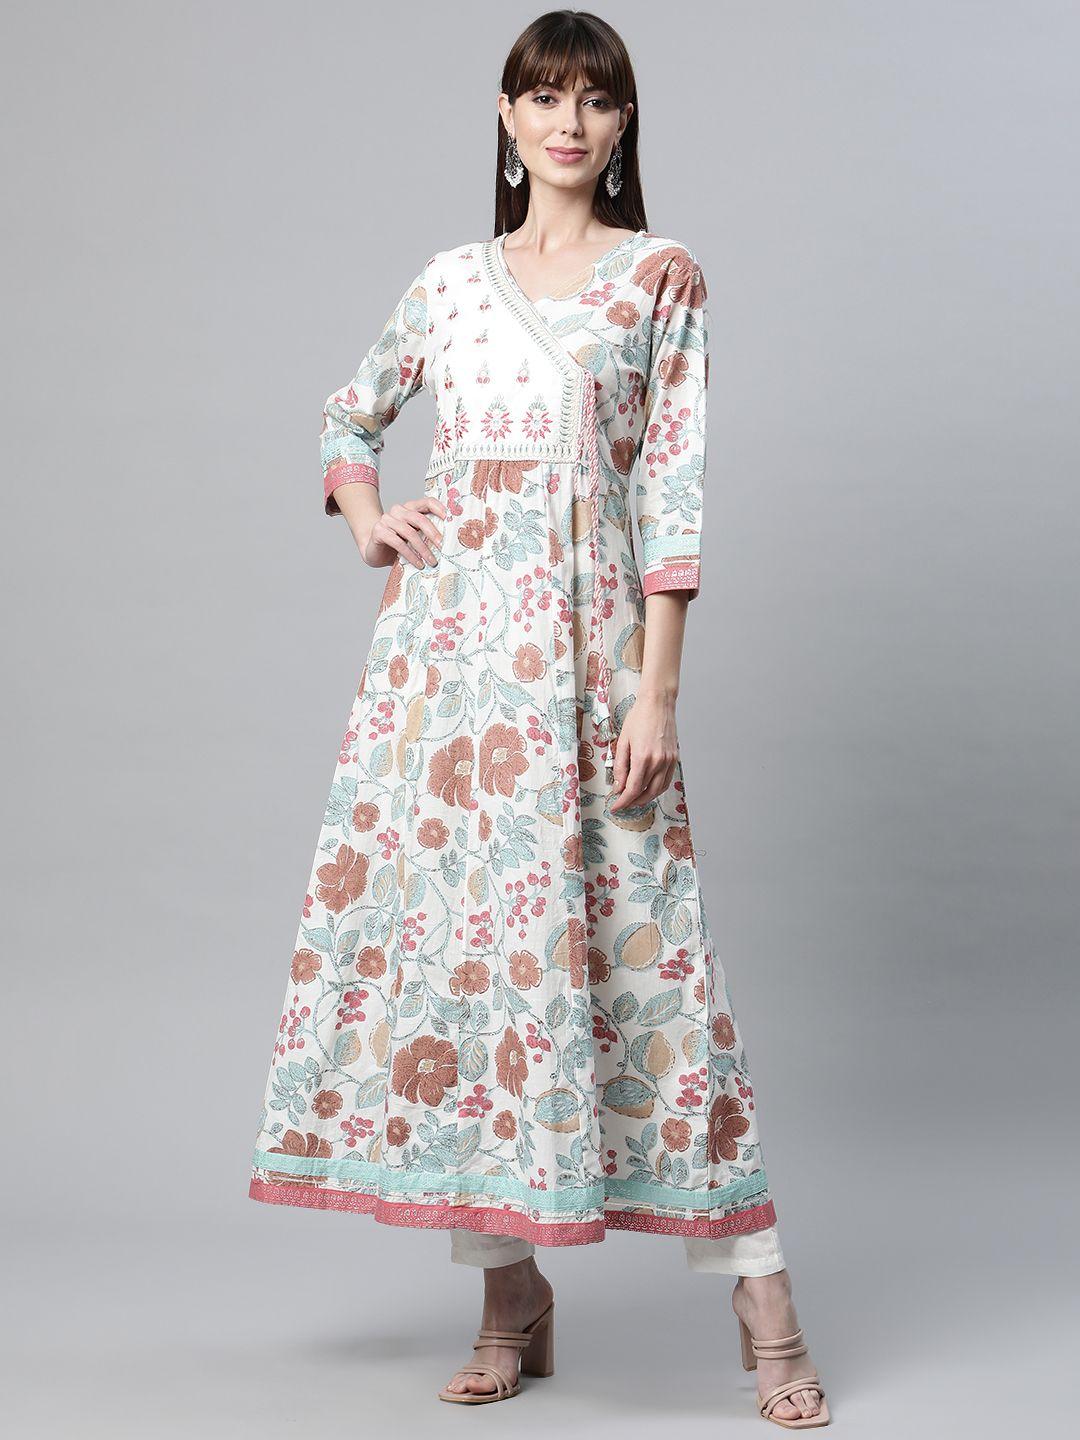 readiprint fashions women white & blue floral printed floral cotton anarkali kurta